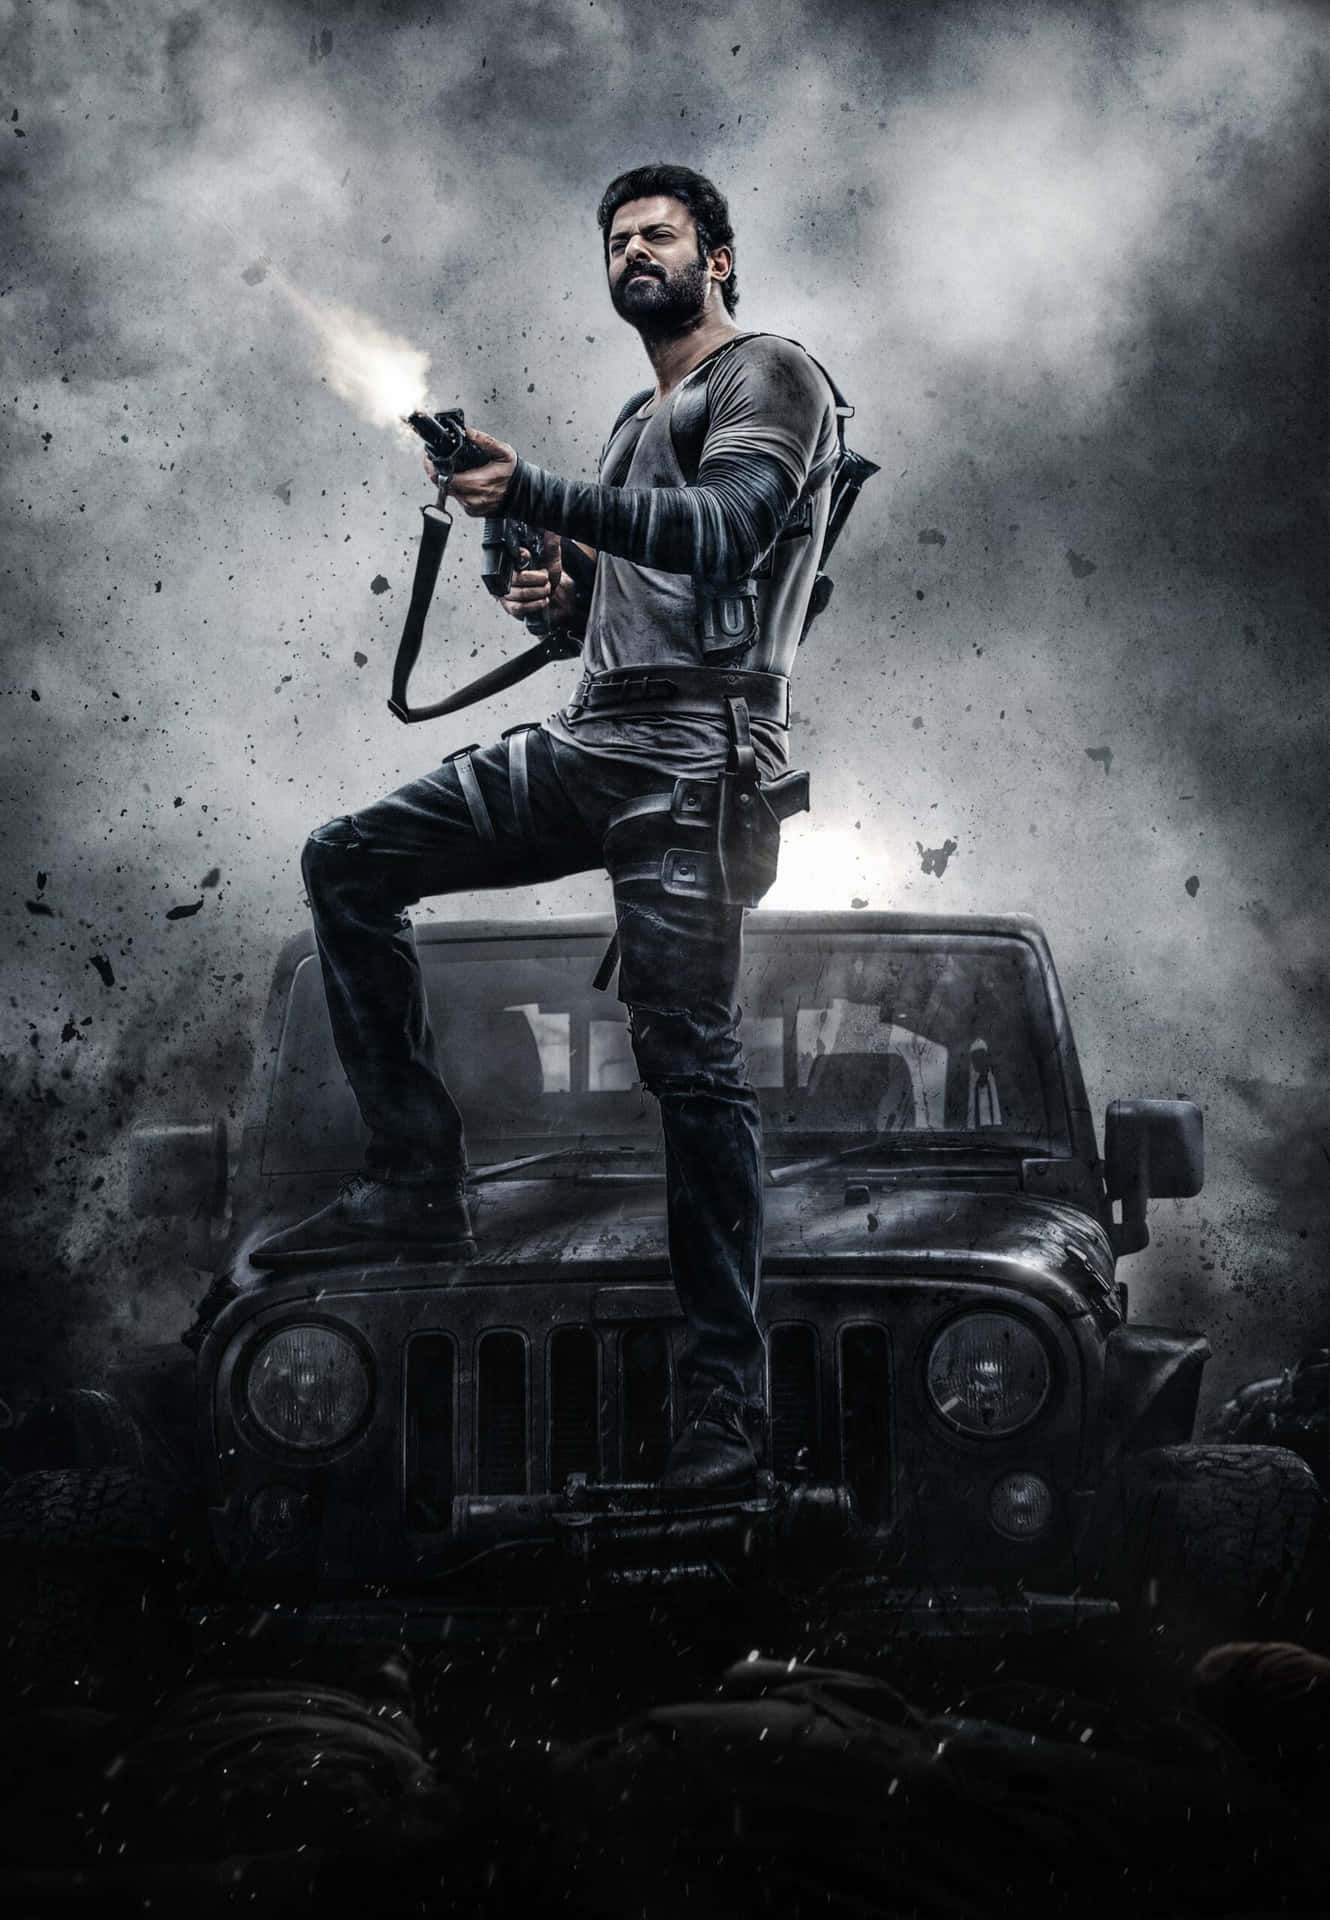 Action Hero Standing On Jeep With Gun.jpg Wallpaper